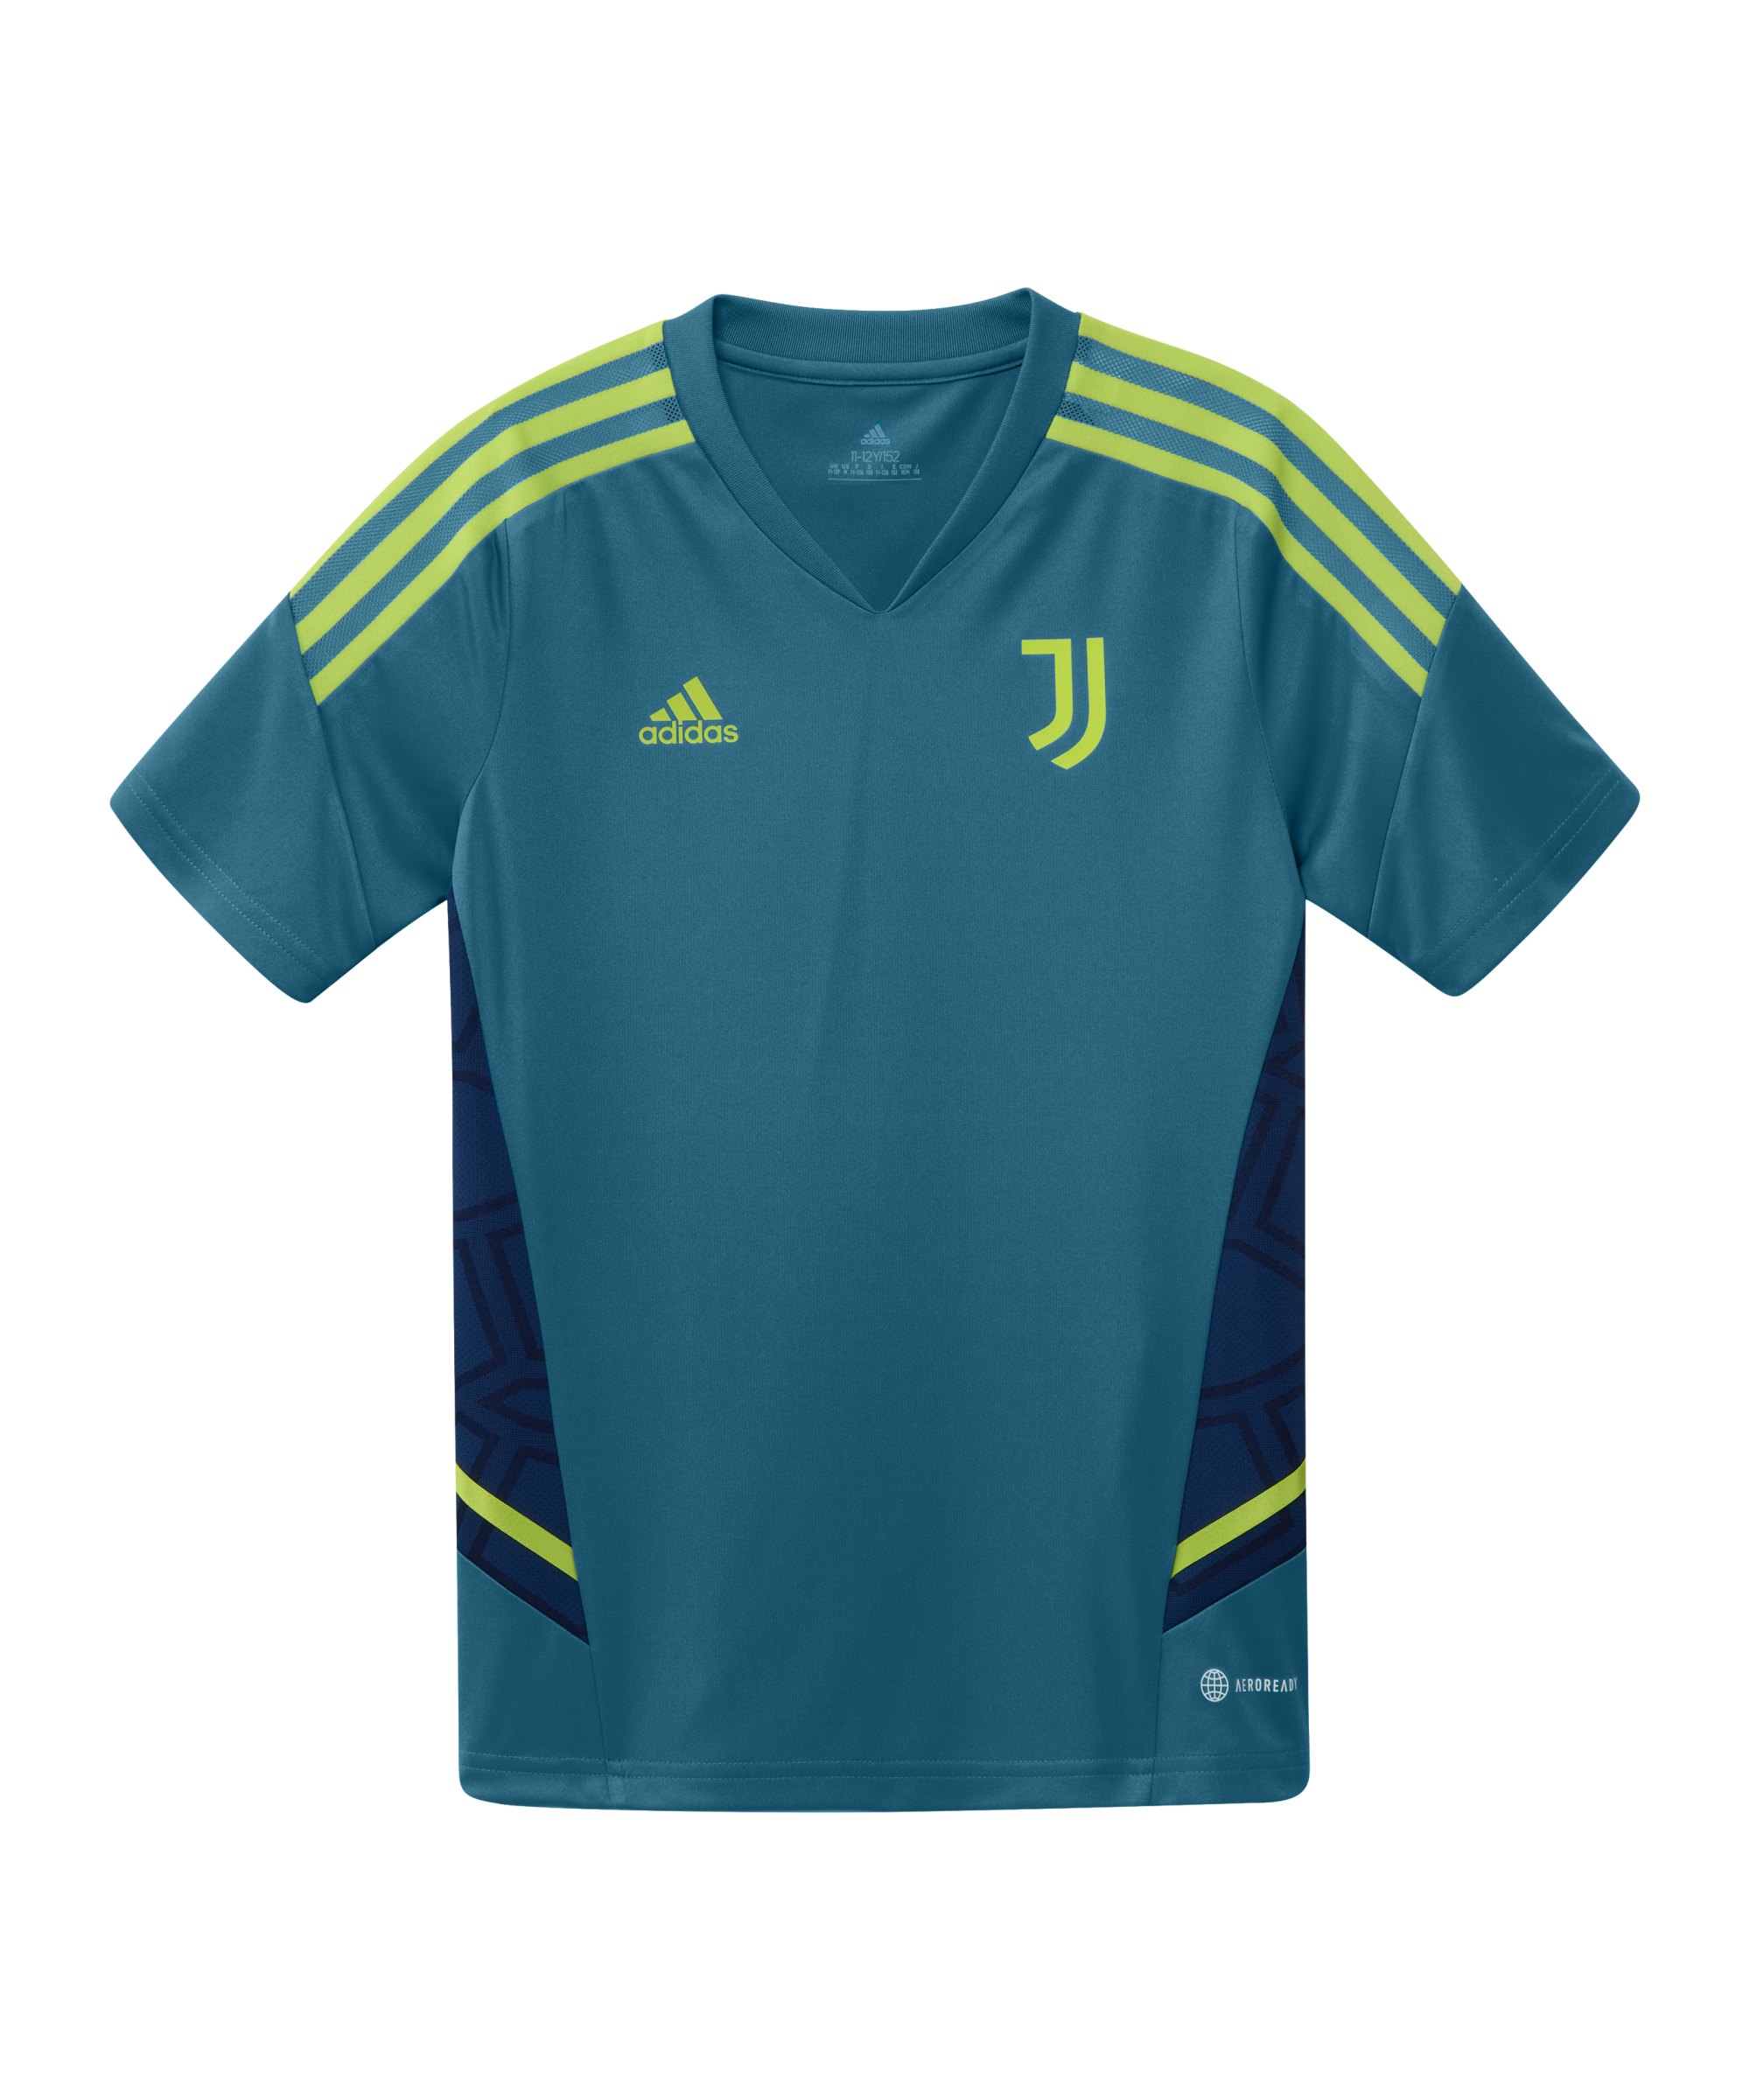 adidas Juventus Turin Trainingsshirt Kids Blau - blau